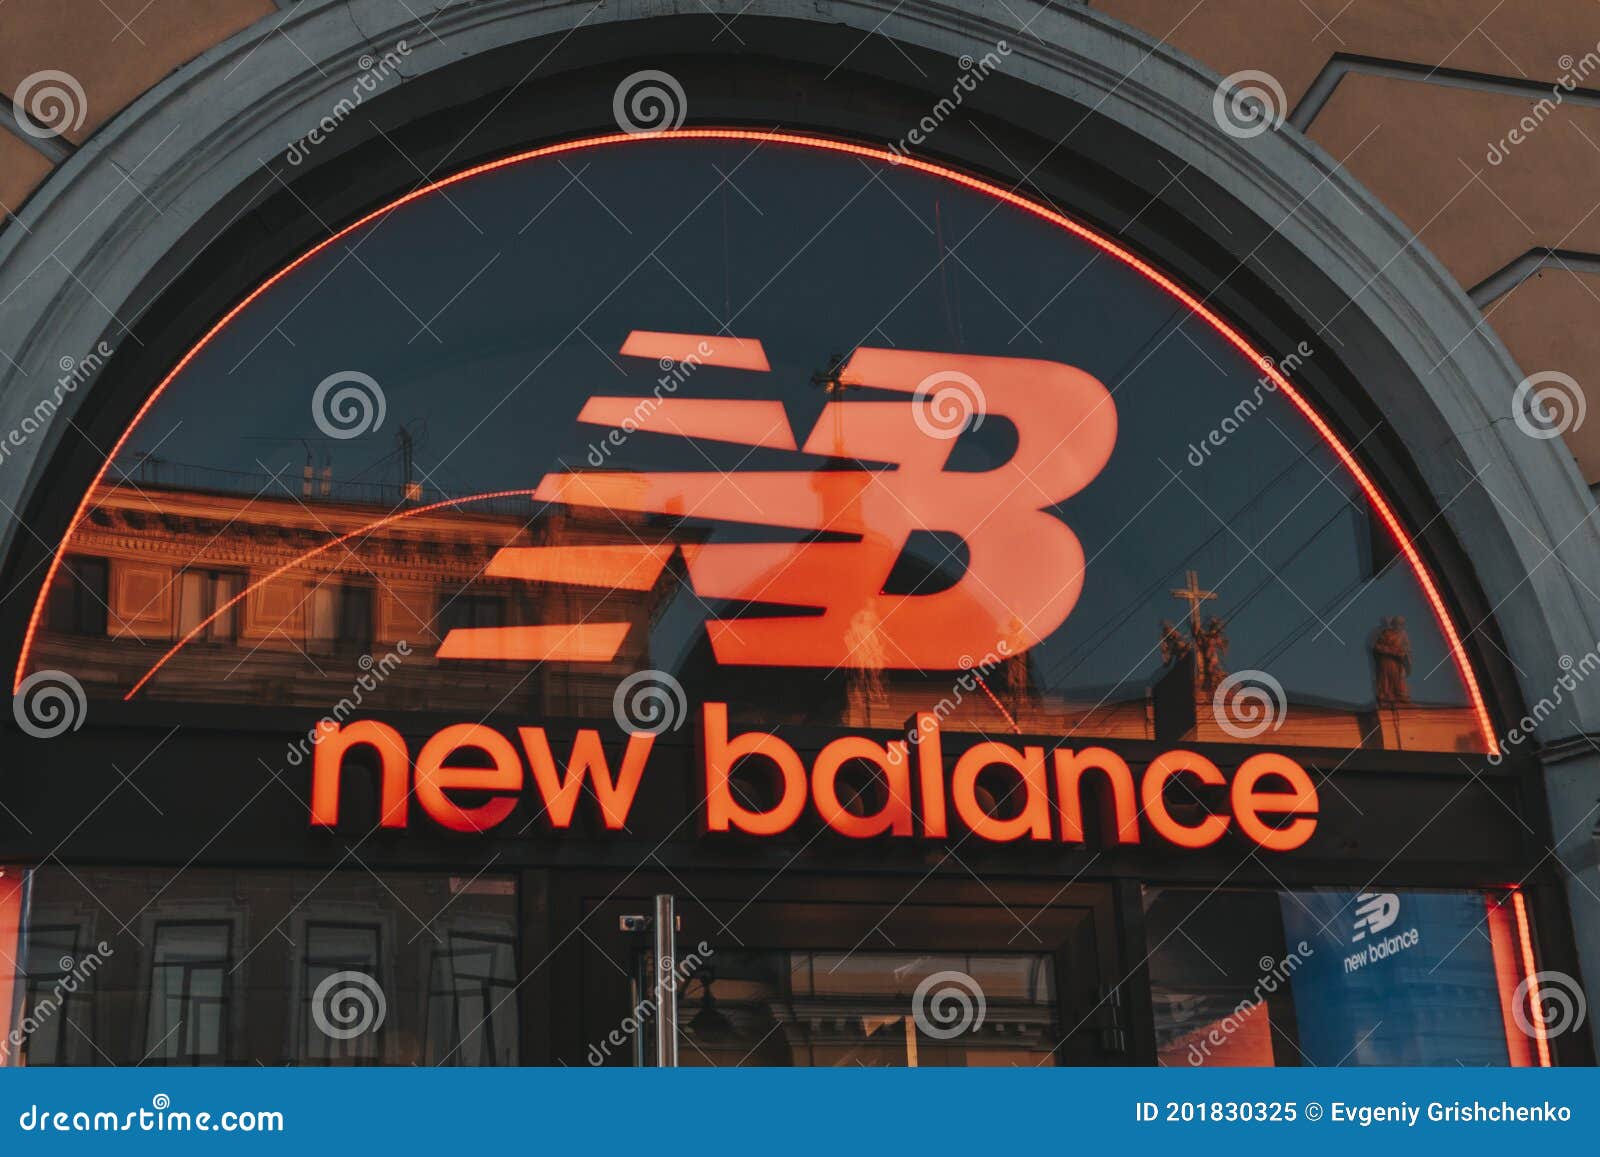 new balance stock market